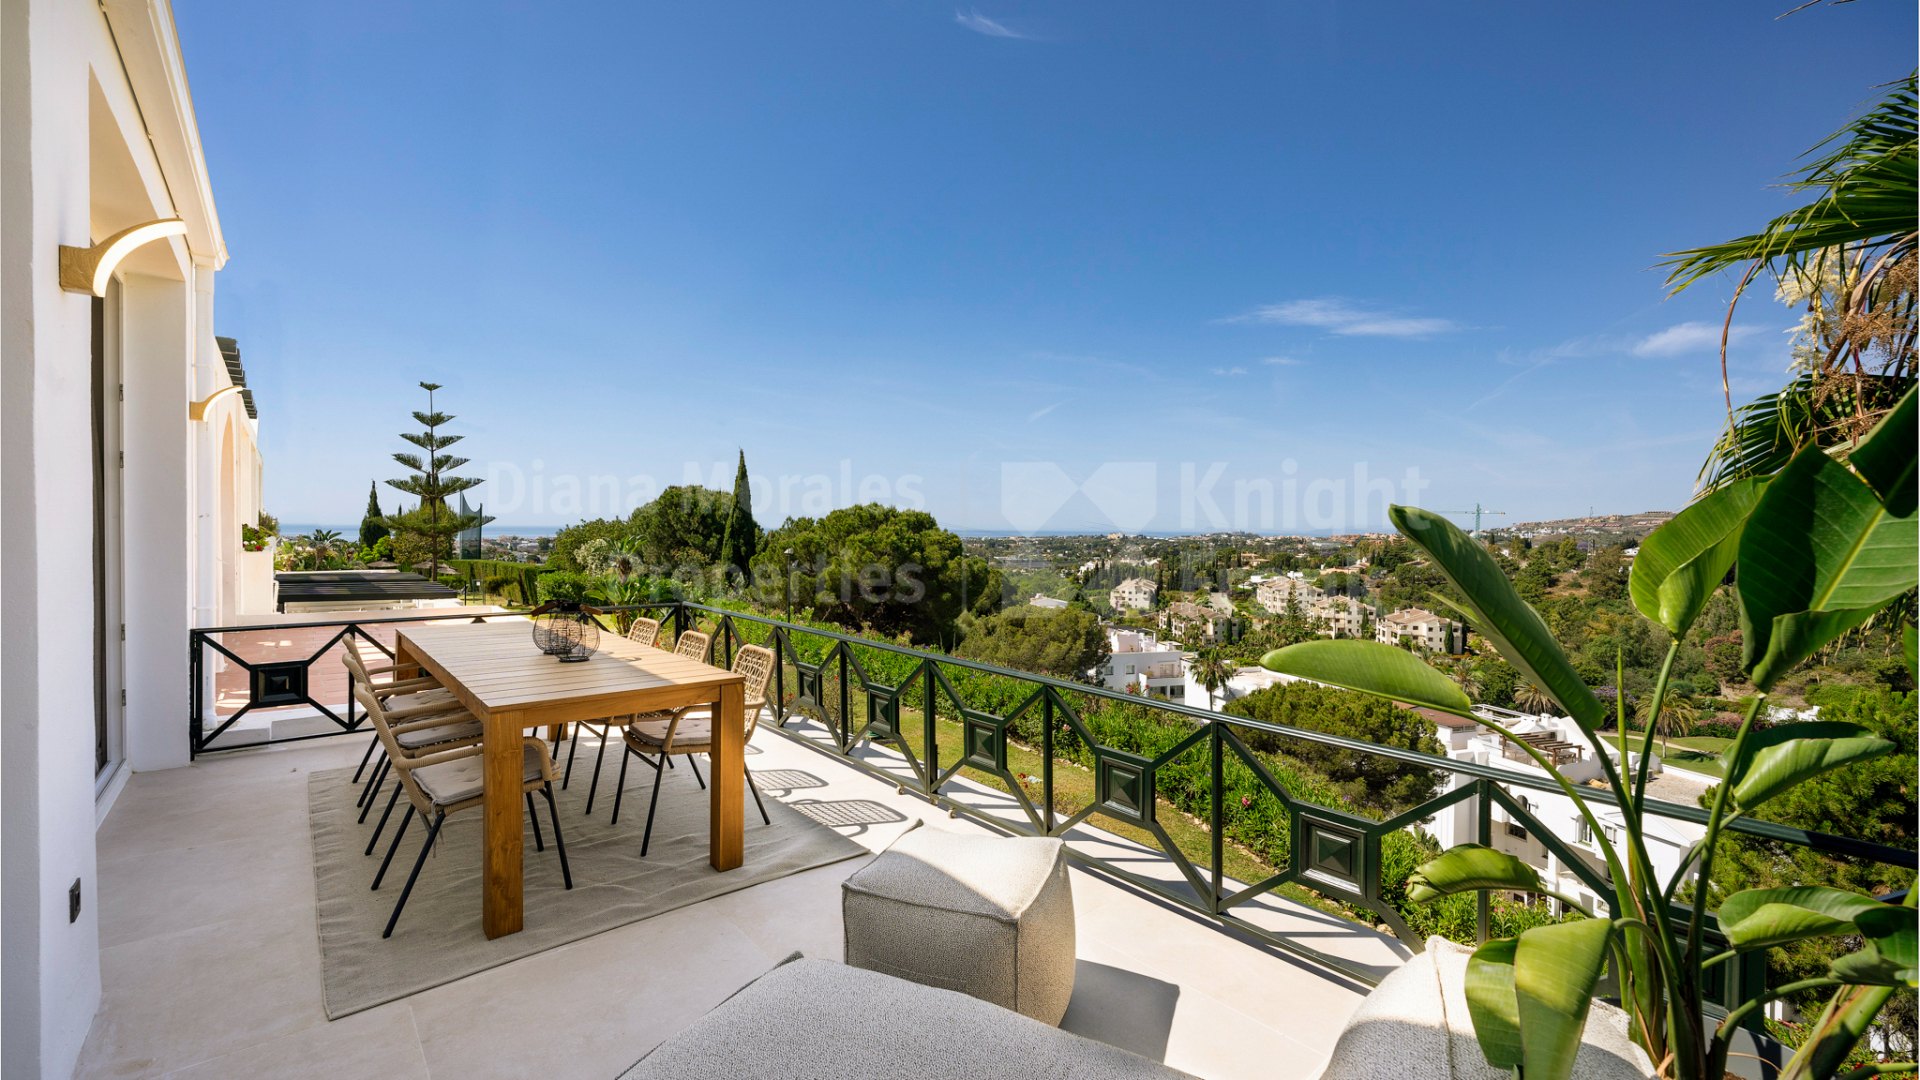 Terrazas de la Quinta, Wohnung mit schönem Meerblick, komplett renoviert